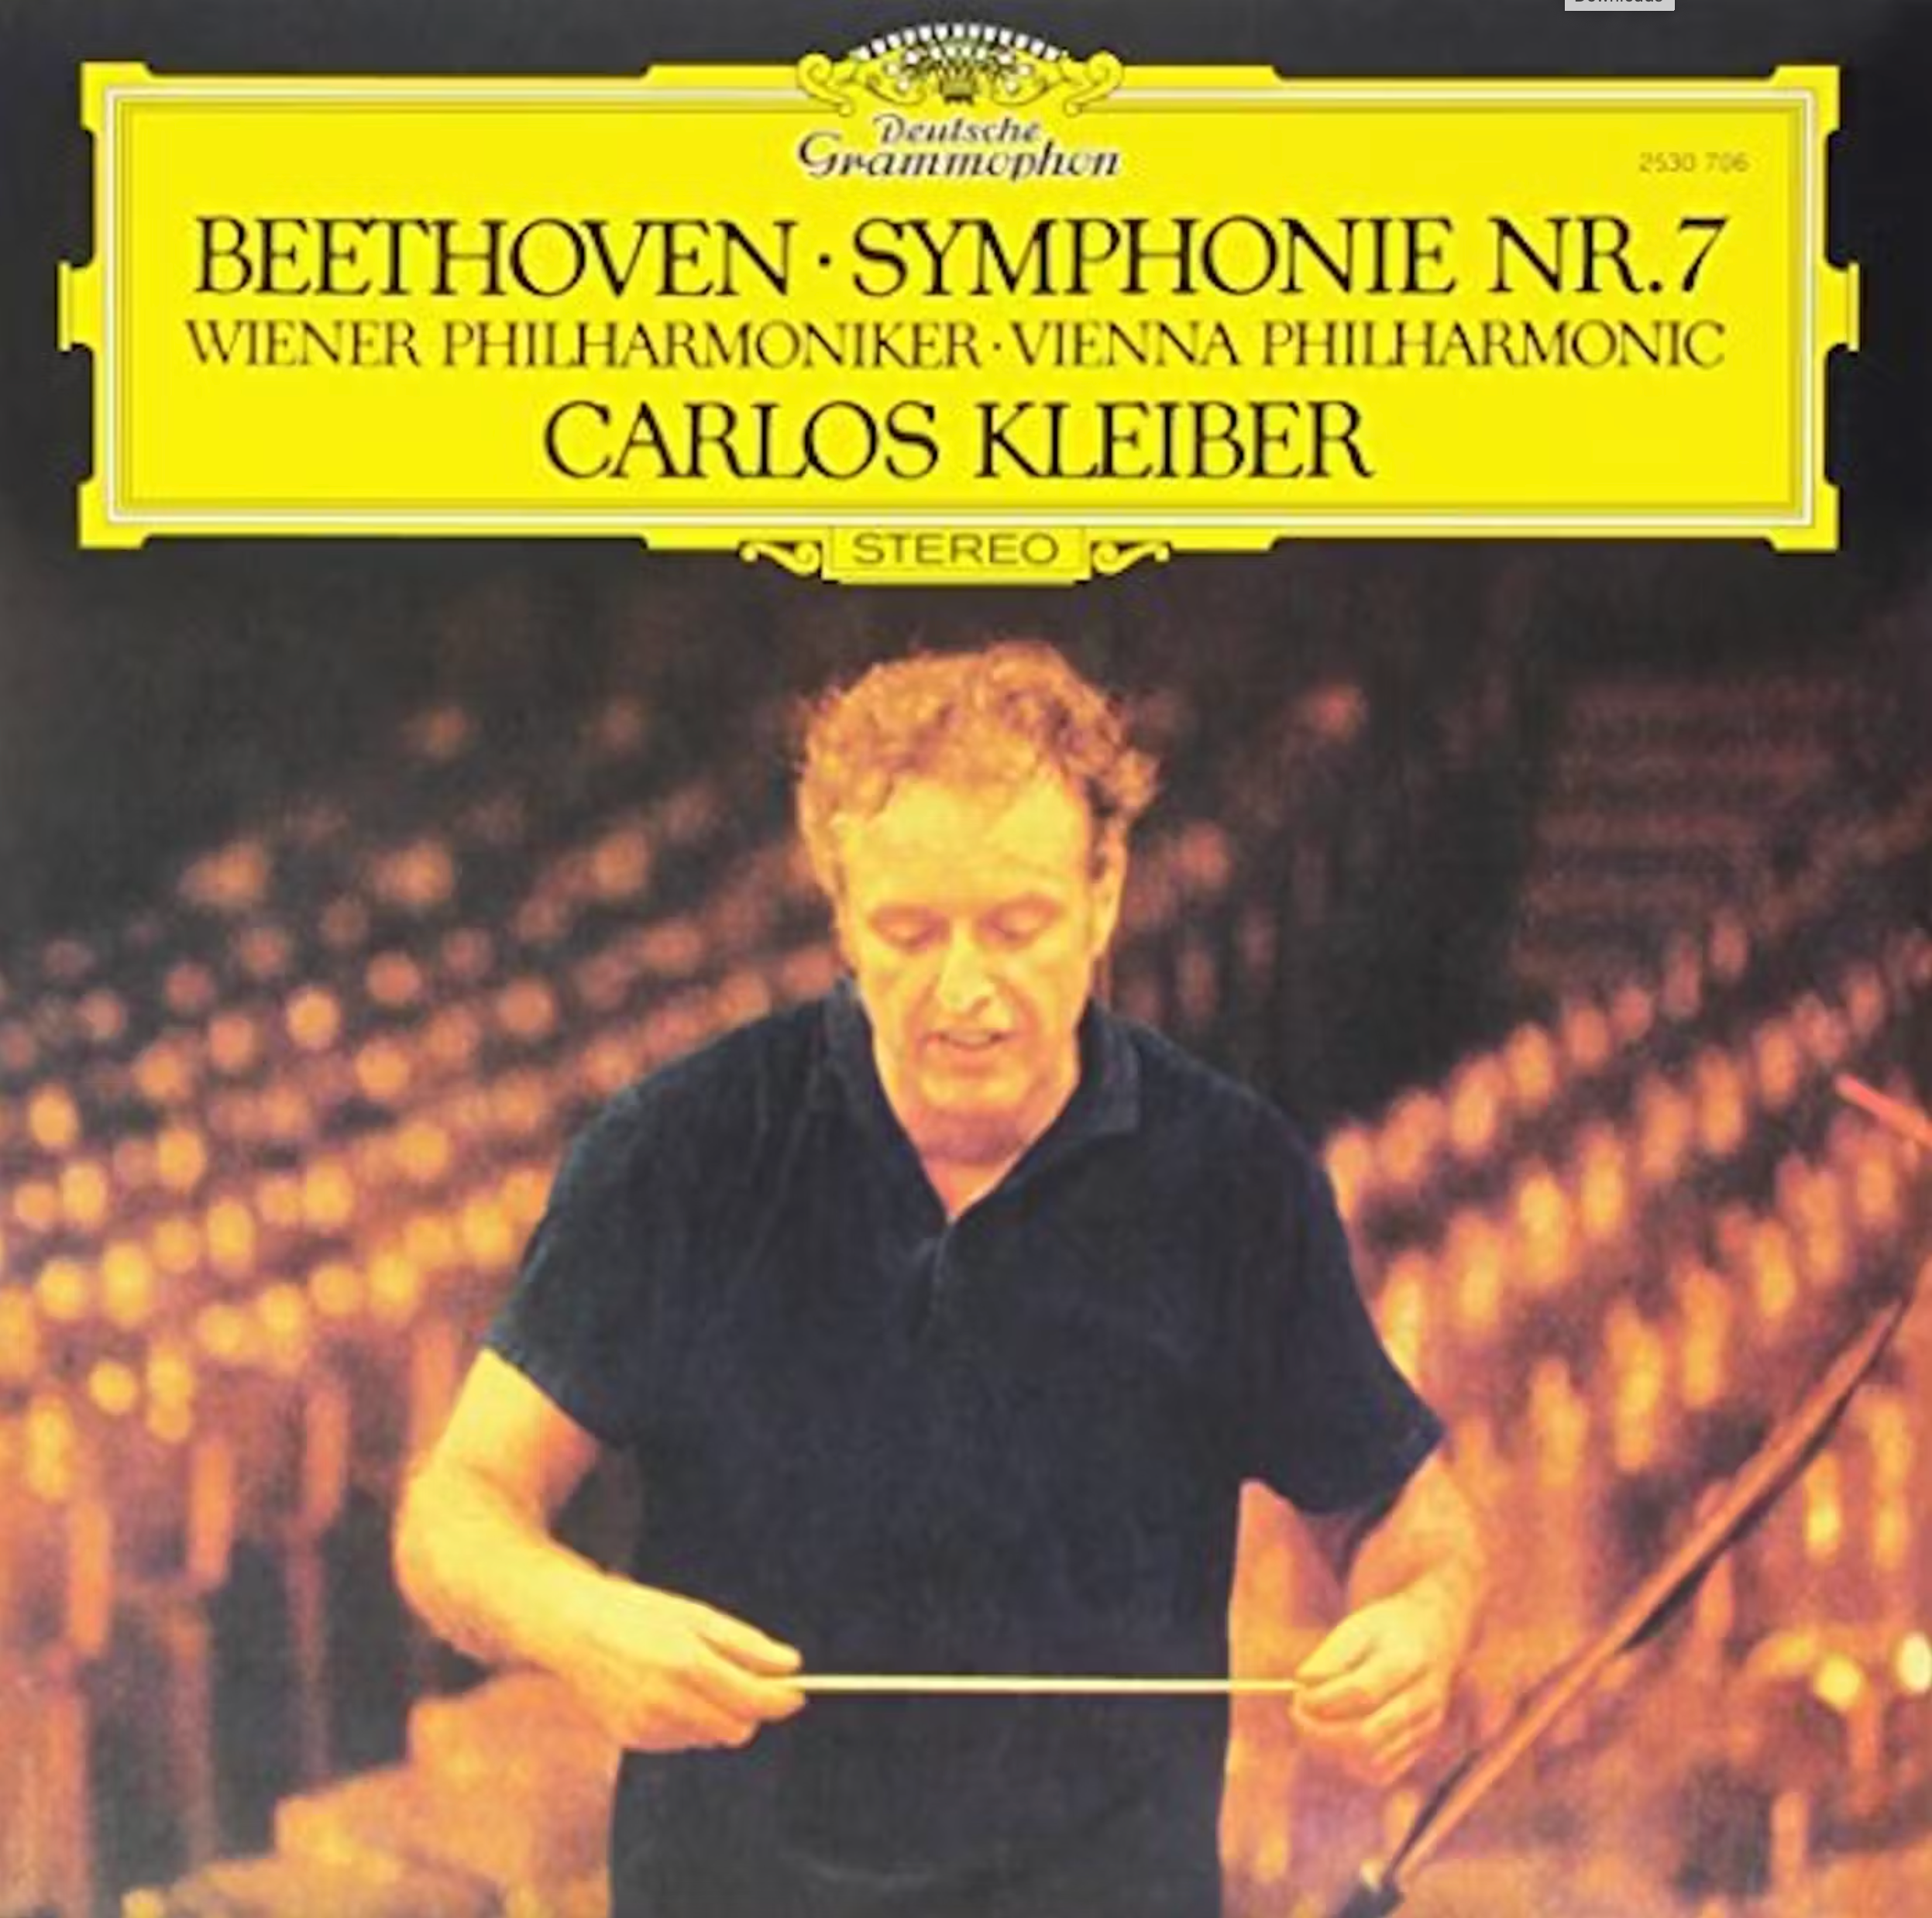 Carlos Kleiber - Symphony No. 7 in A Major, Op. 92 [Original Source Series]